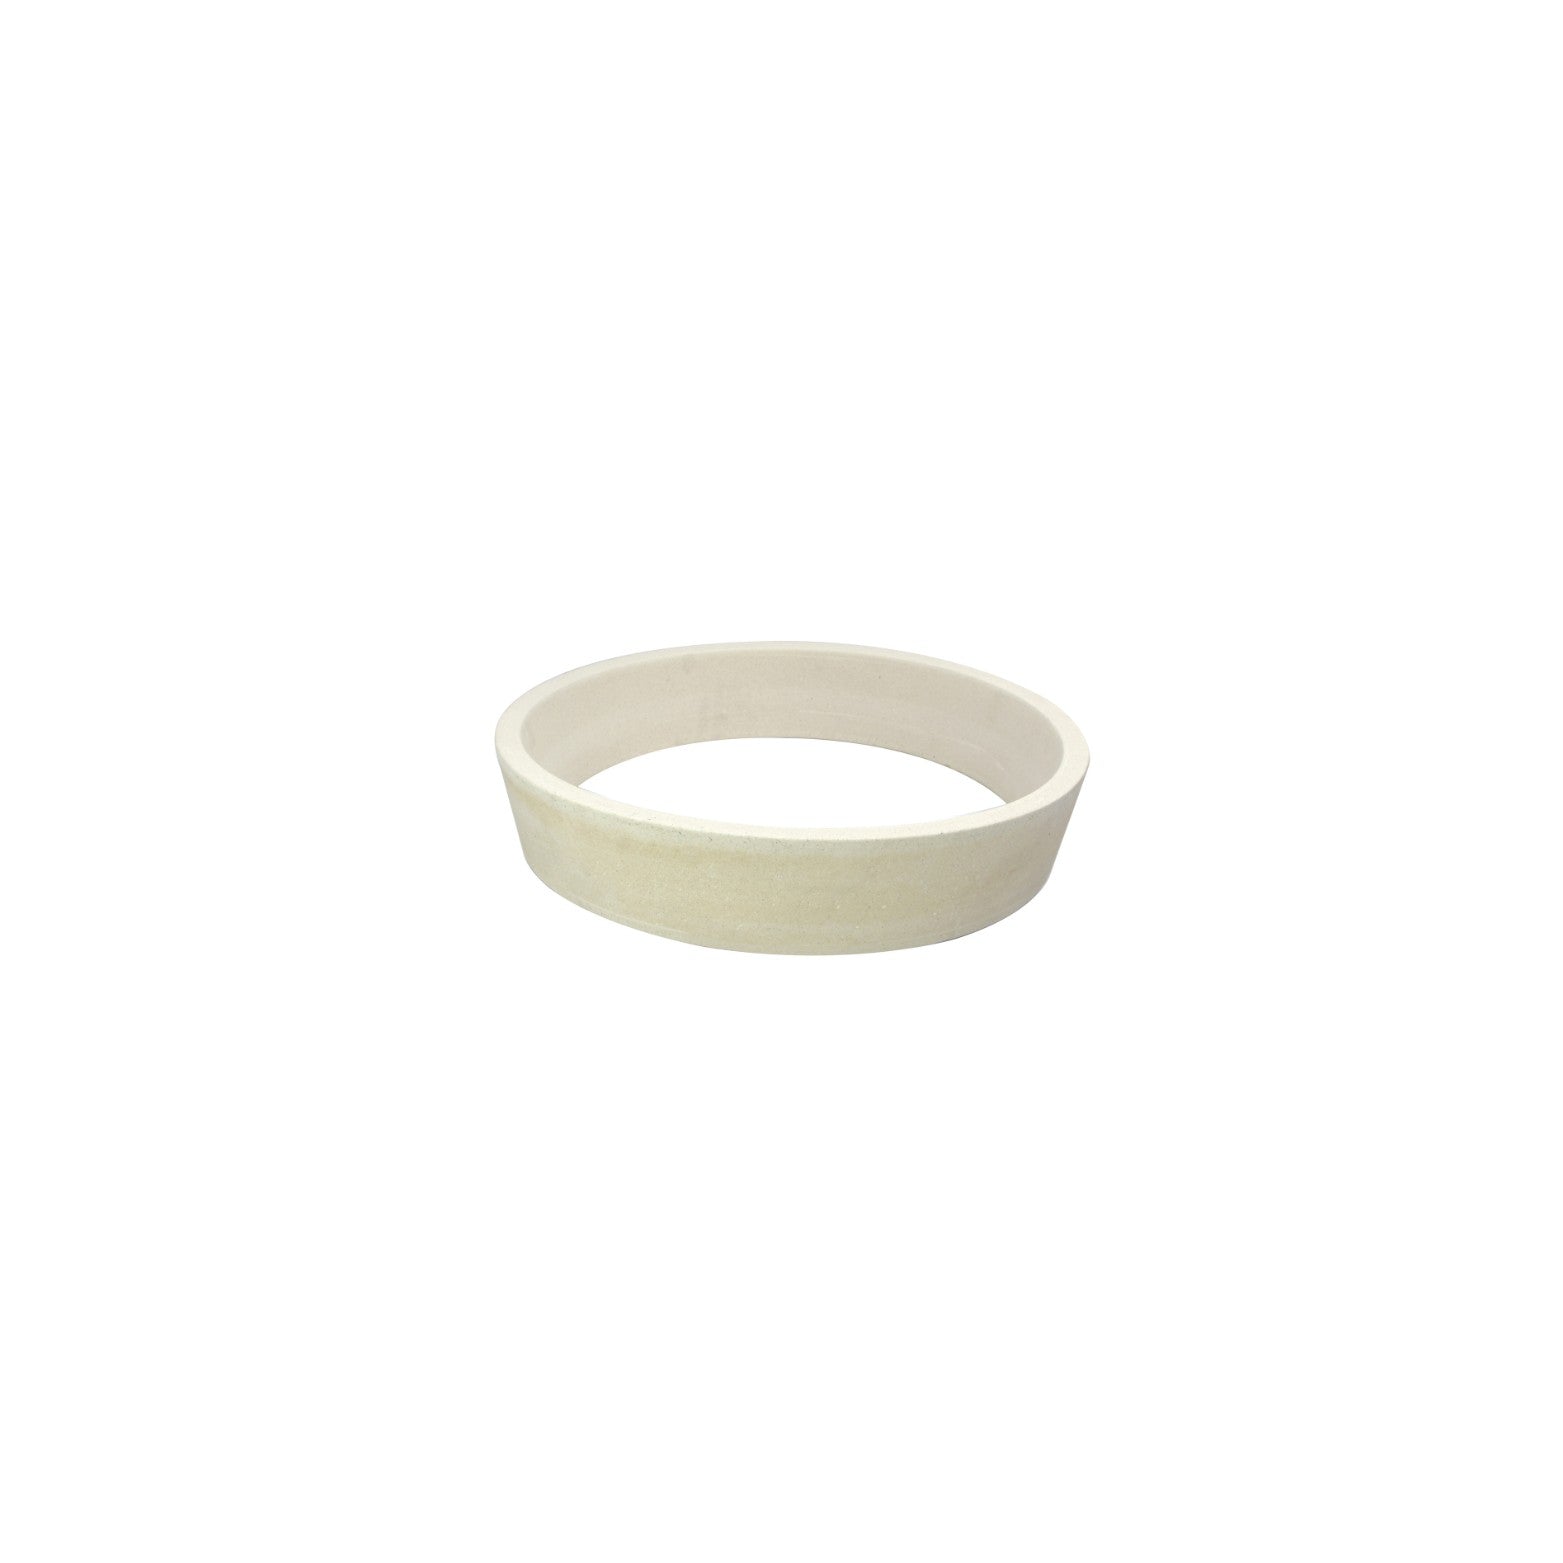 Vuurring/Keramische Ring - Compact 33,5 cm - kamadogrills